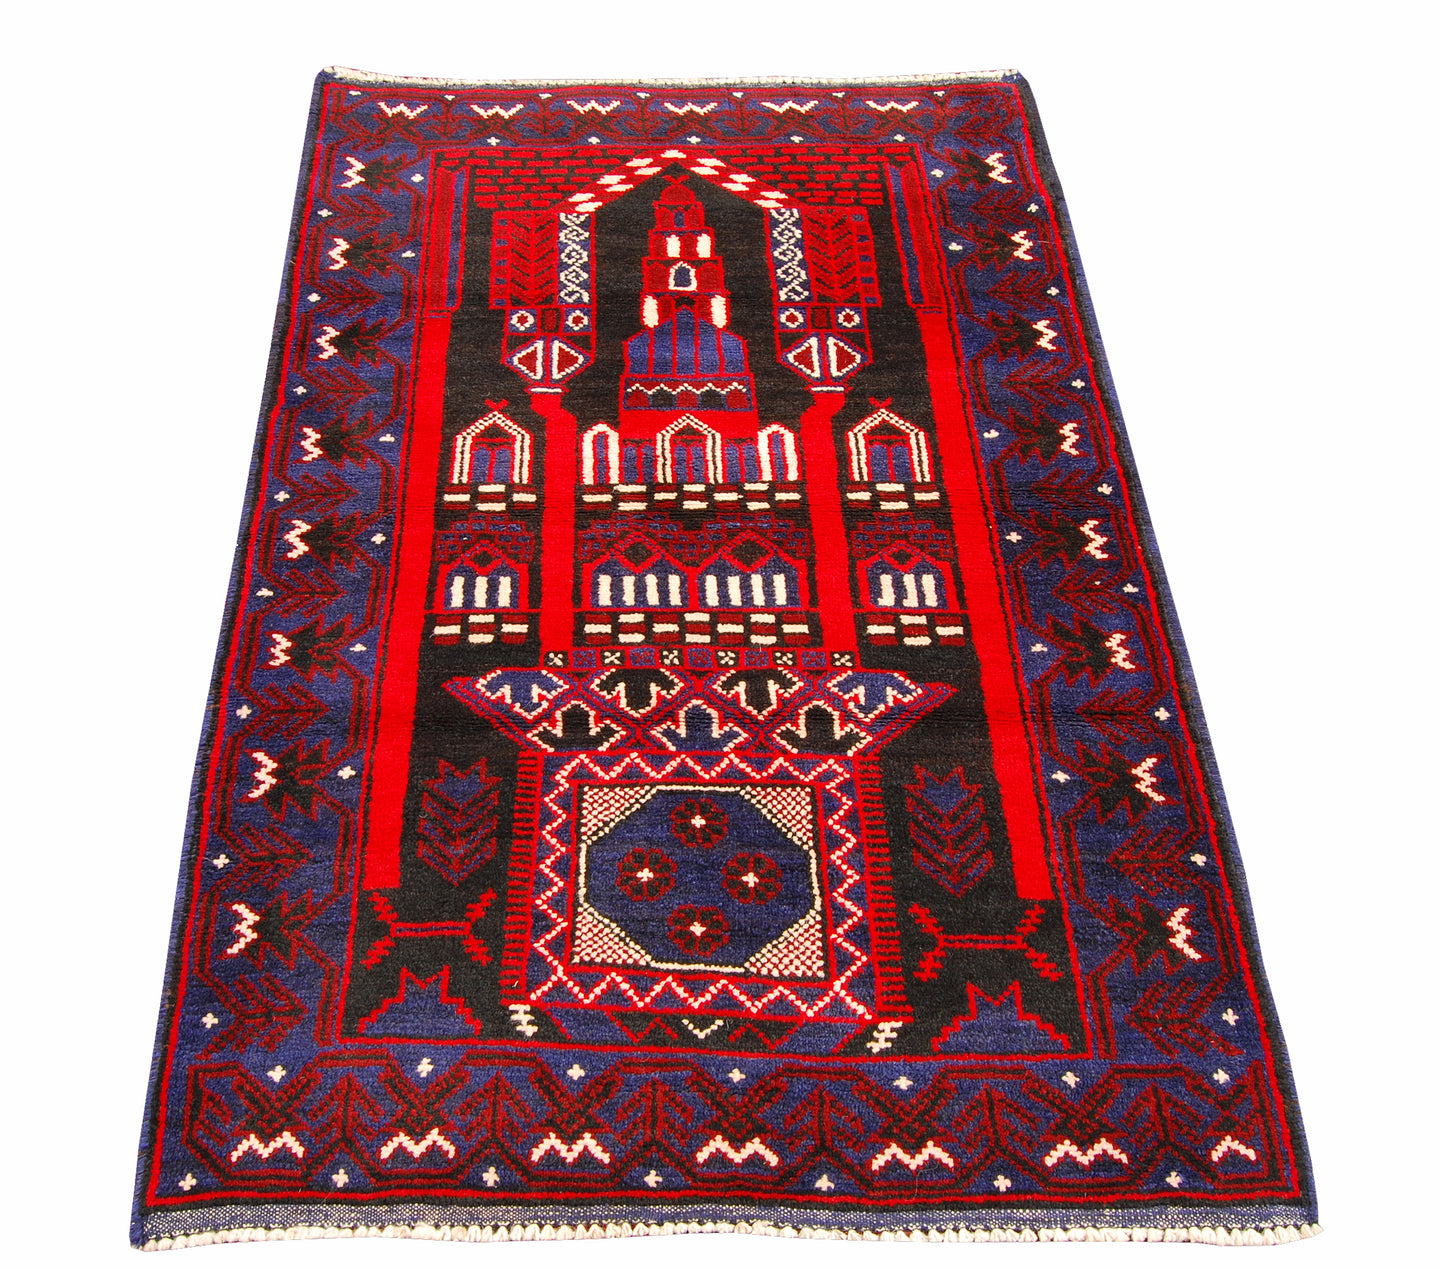 Genuine, Original Pure Wool Rug Rustic Handmad Carpet CM 145x95